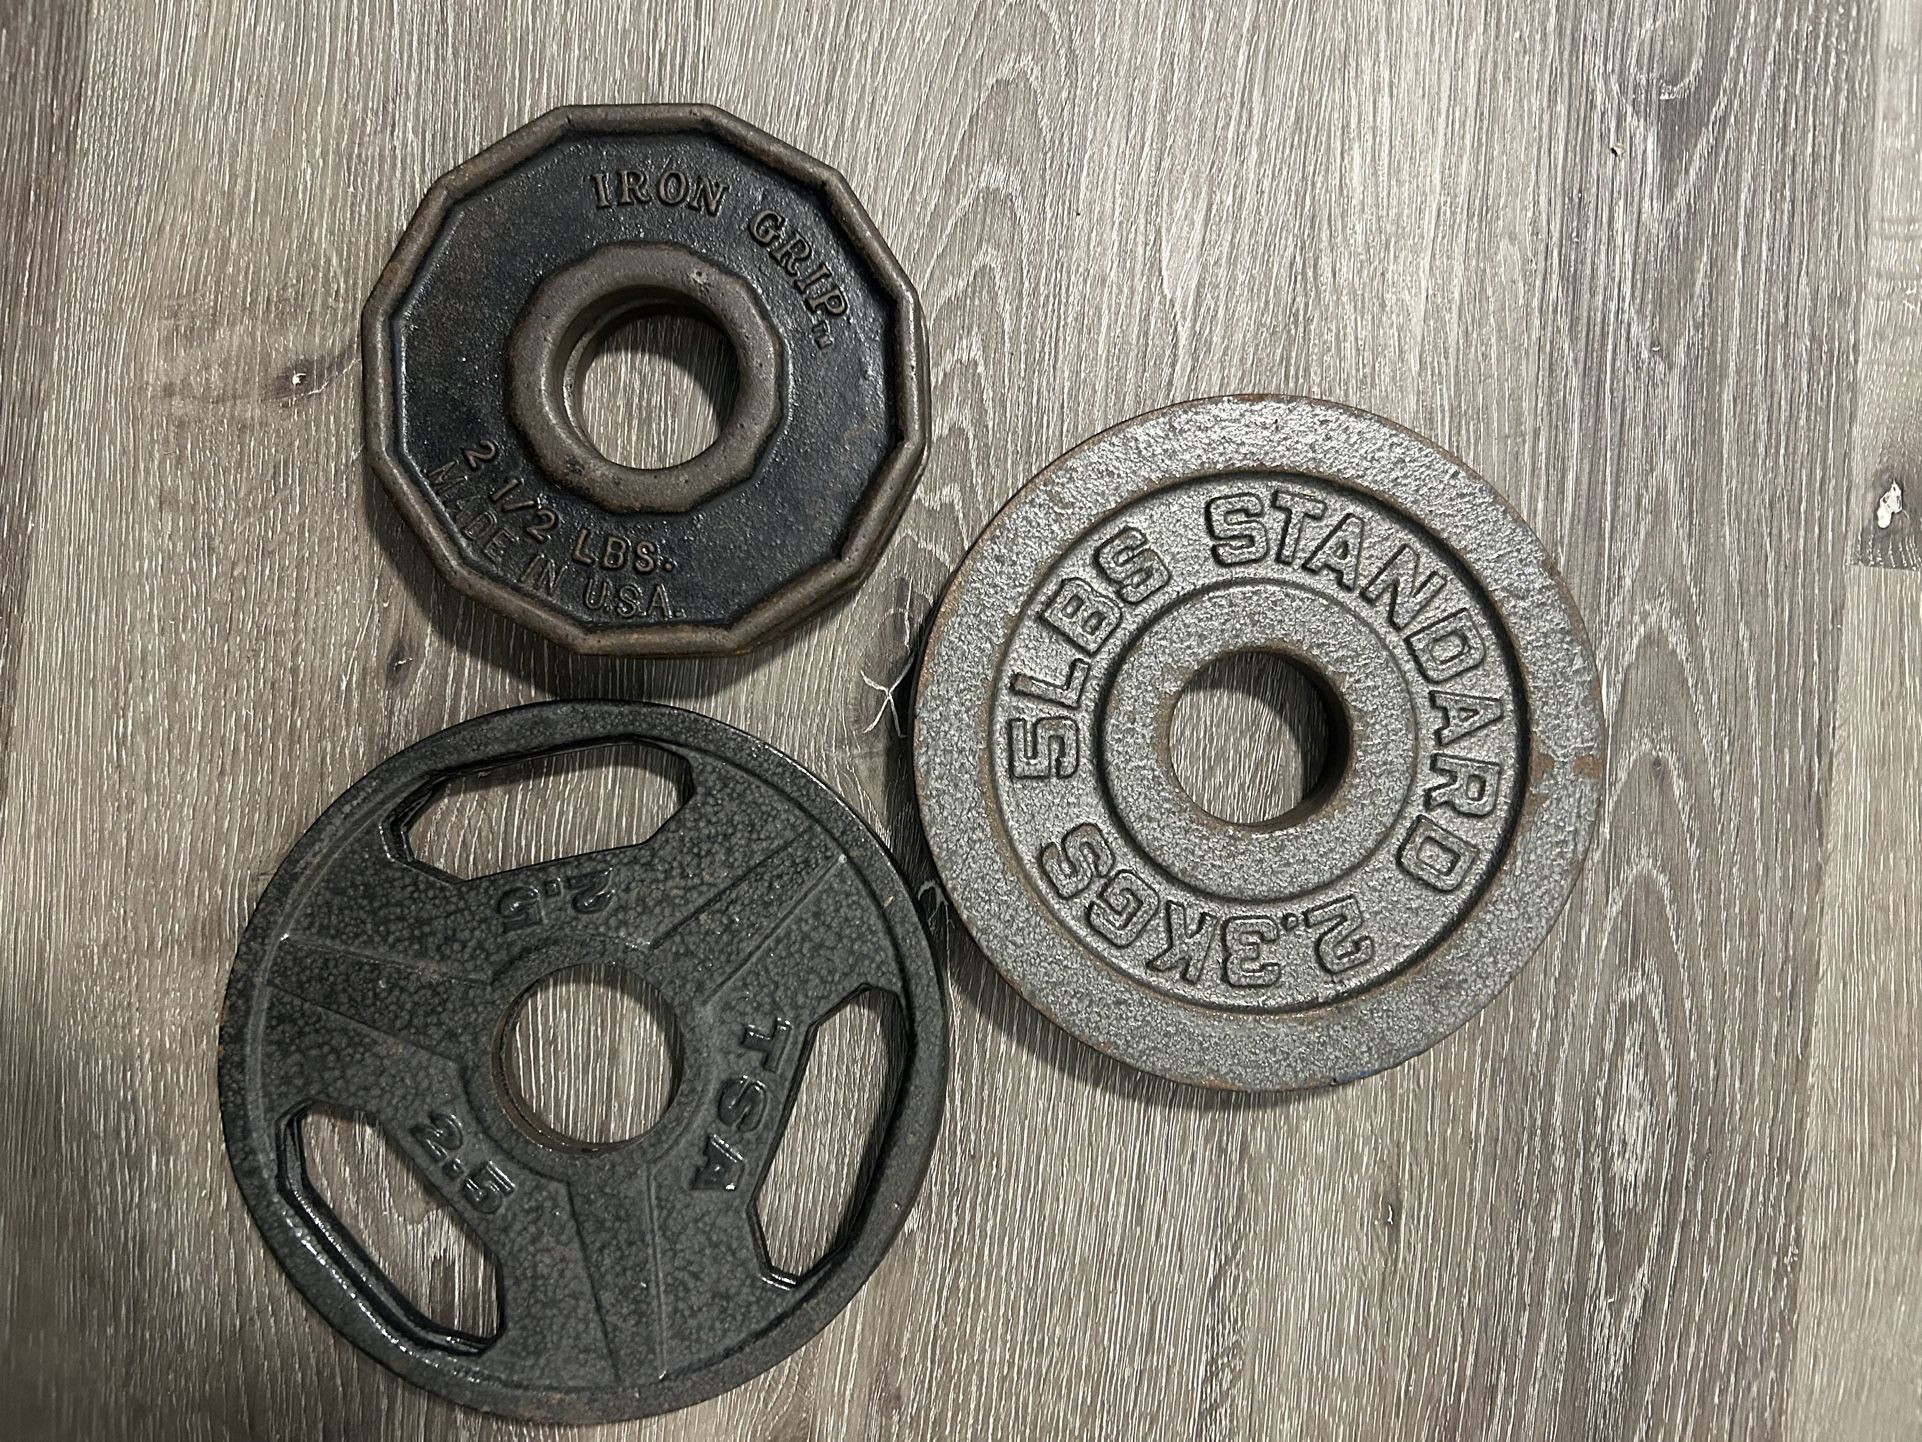 Change Plate Weights (2.5 lb & 5 lb sets)